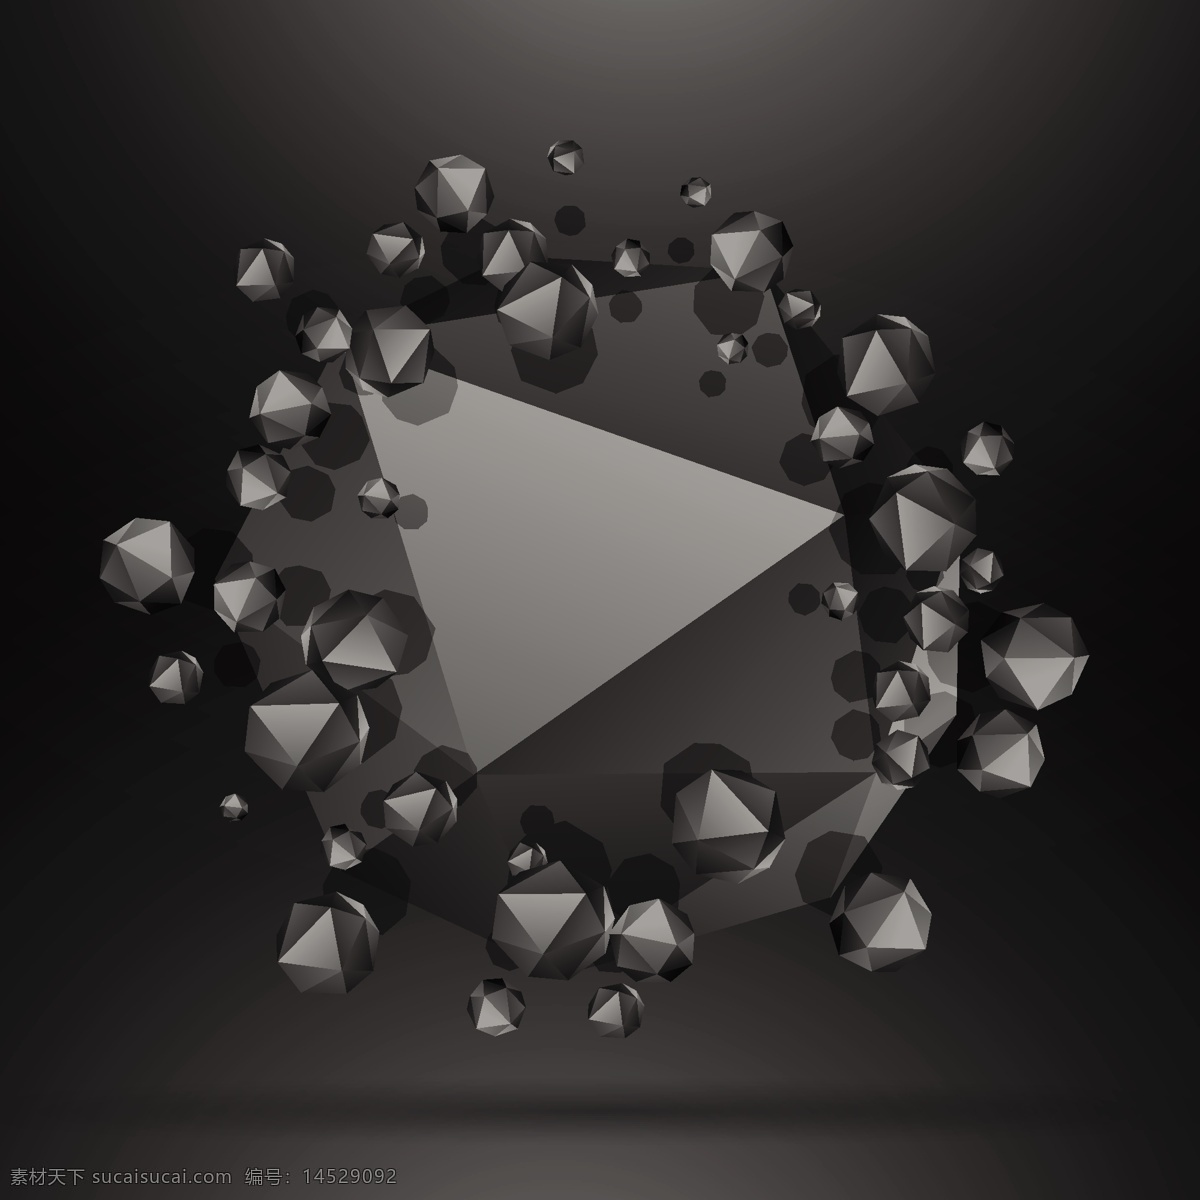 3d 中 三角形 多边形 黑色 背景 抽象背景 抽象 几何 科学 形状 三维 能量 几何背景 化学 现代 未来 几何形态 暗 分子 物理学